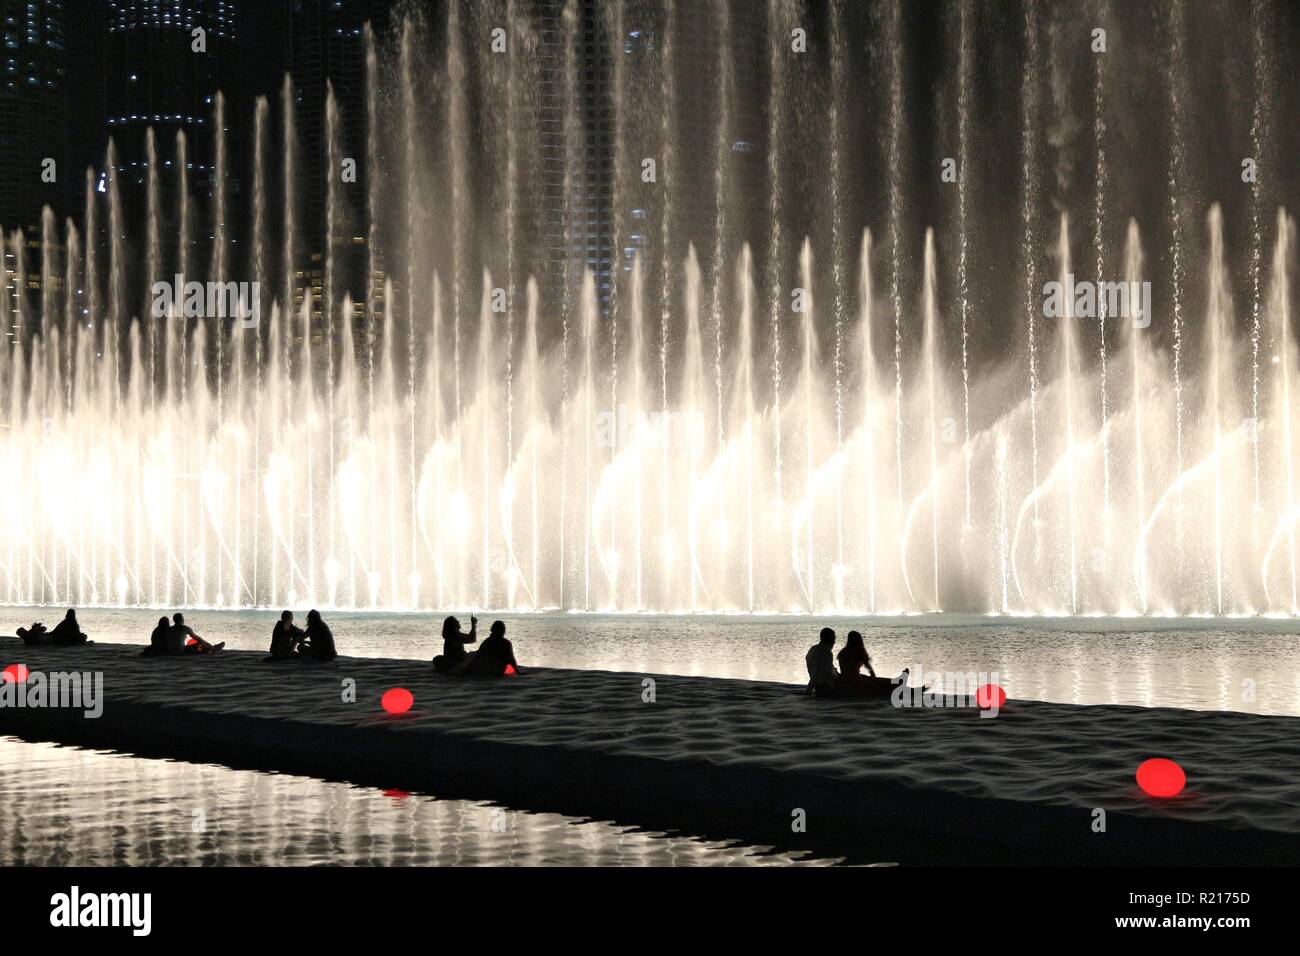 DUBAI, UAE - NOVEMBER 22, 2017: People visit the fountain show in Dubai. The Dubai Fountain is the world's 2nd largest choreographed fountain system. Stock Photo